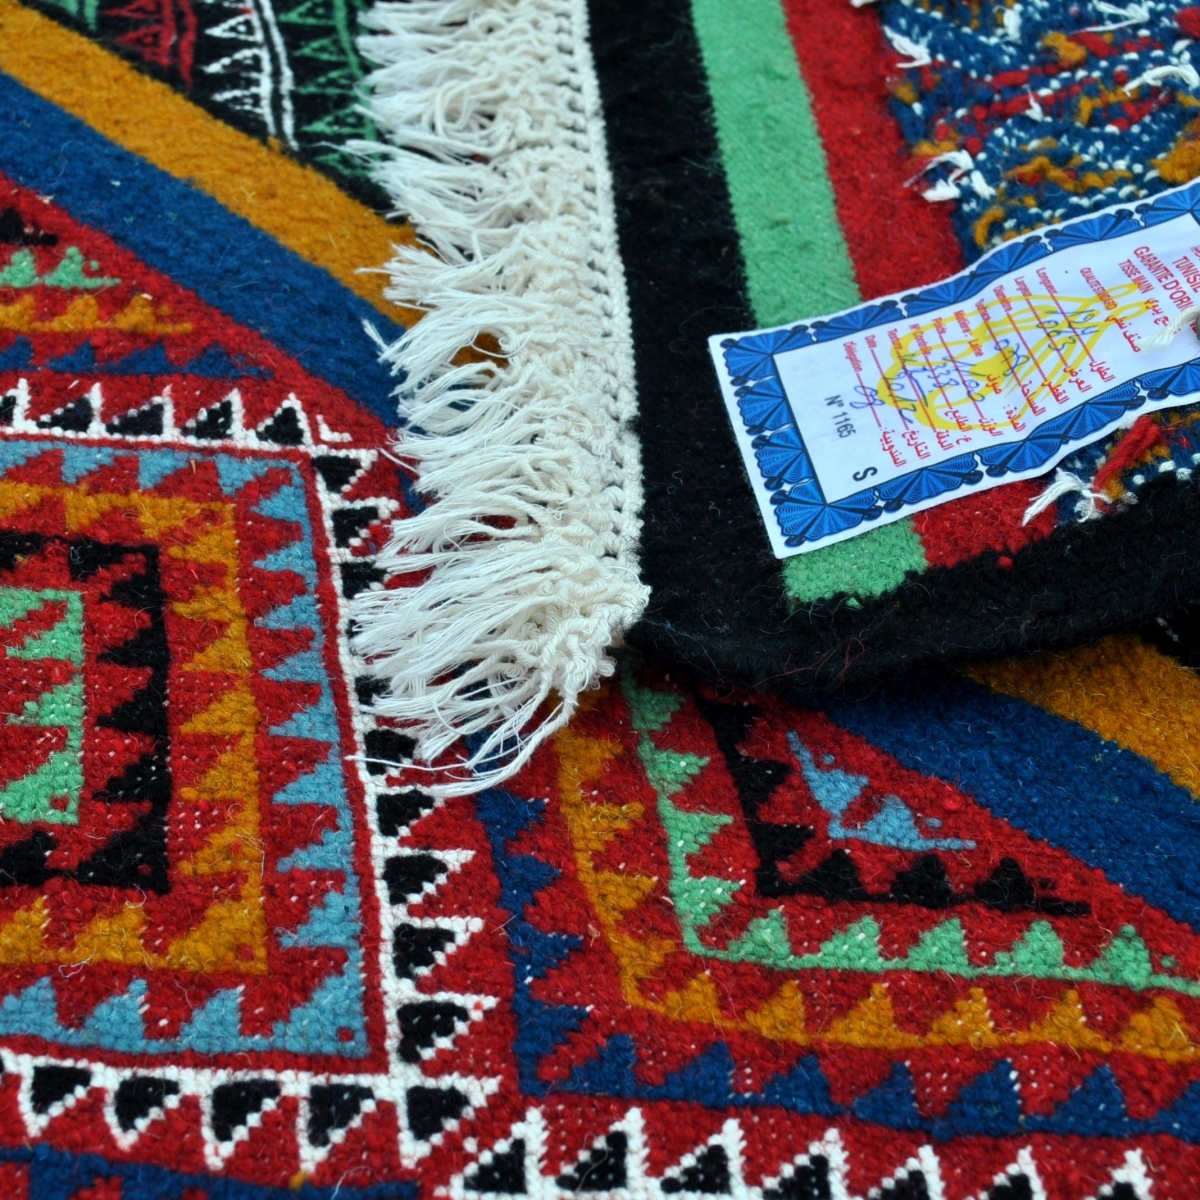 Berber carpet Rug Kilim Kef 60x110 Multicolour (Handmade, Wool) Tunisian Rug Kilim style Moroccan rug. Rectangular carpet 100% w